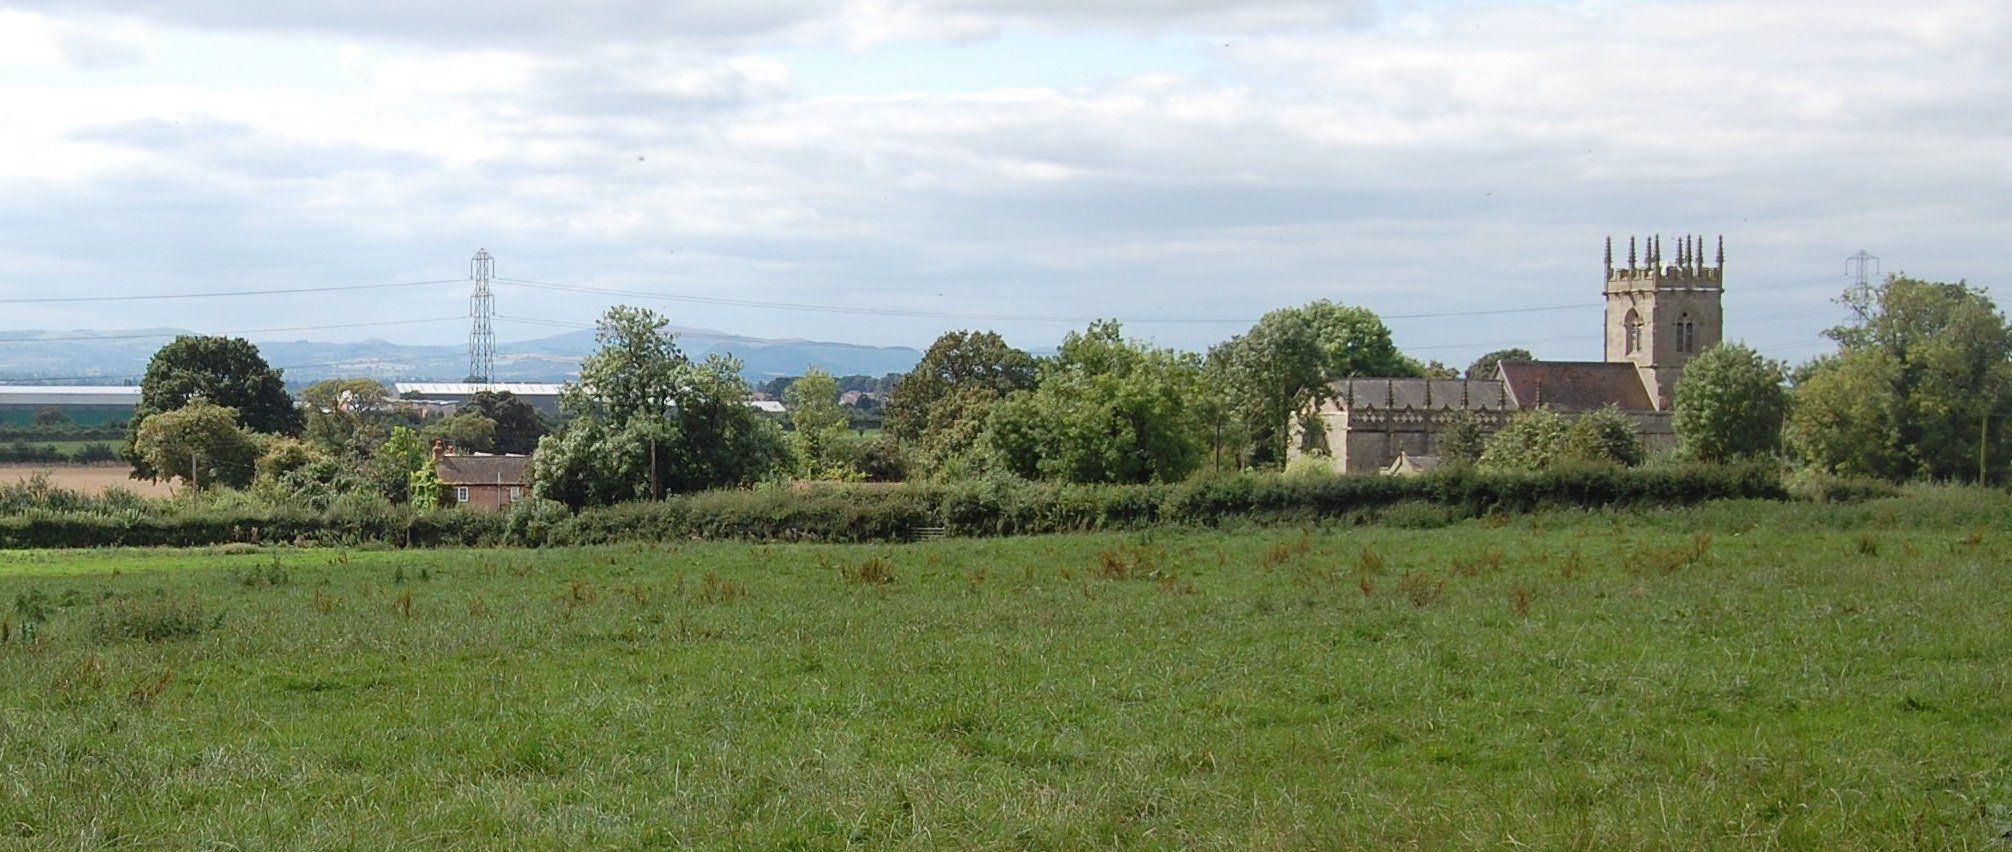 Shrewsbury battlefield from the visitor centre, Shropshire